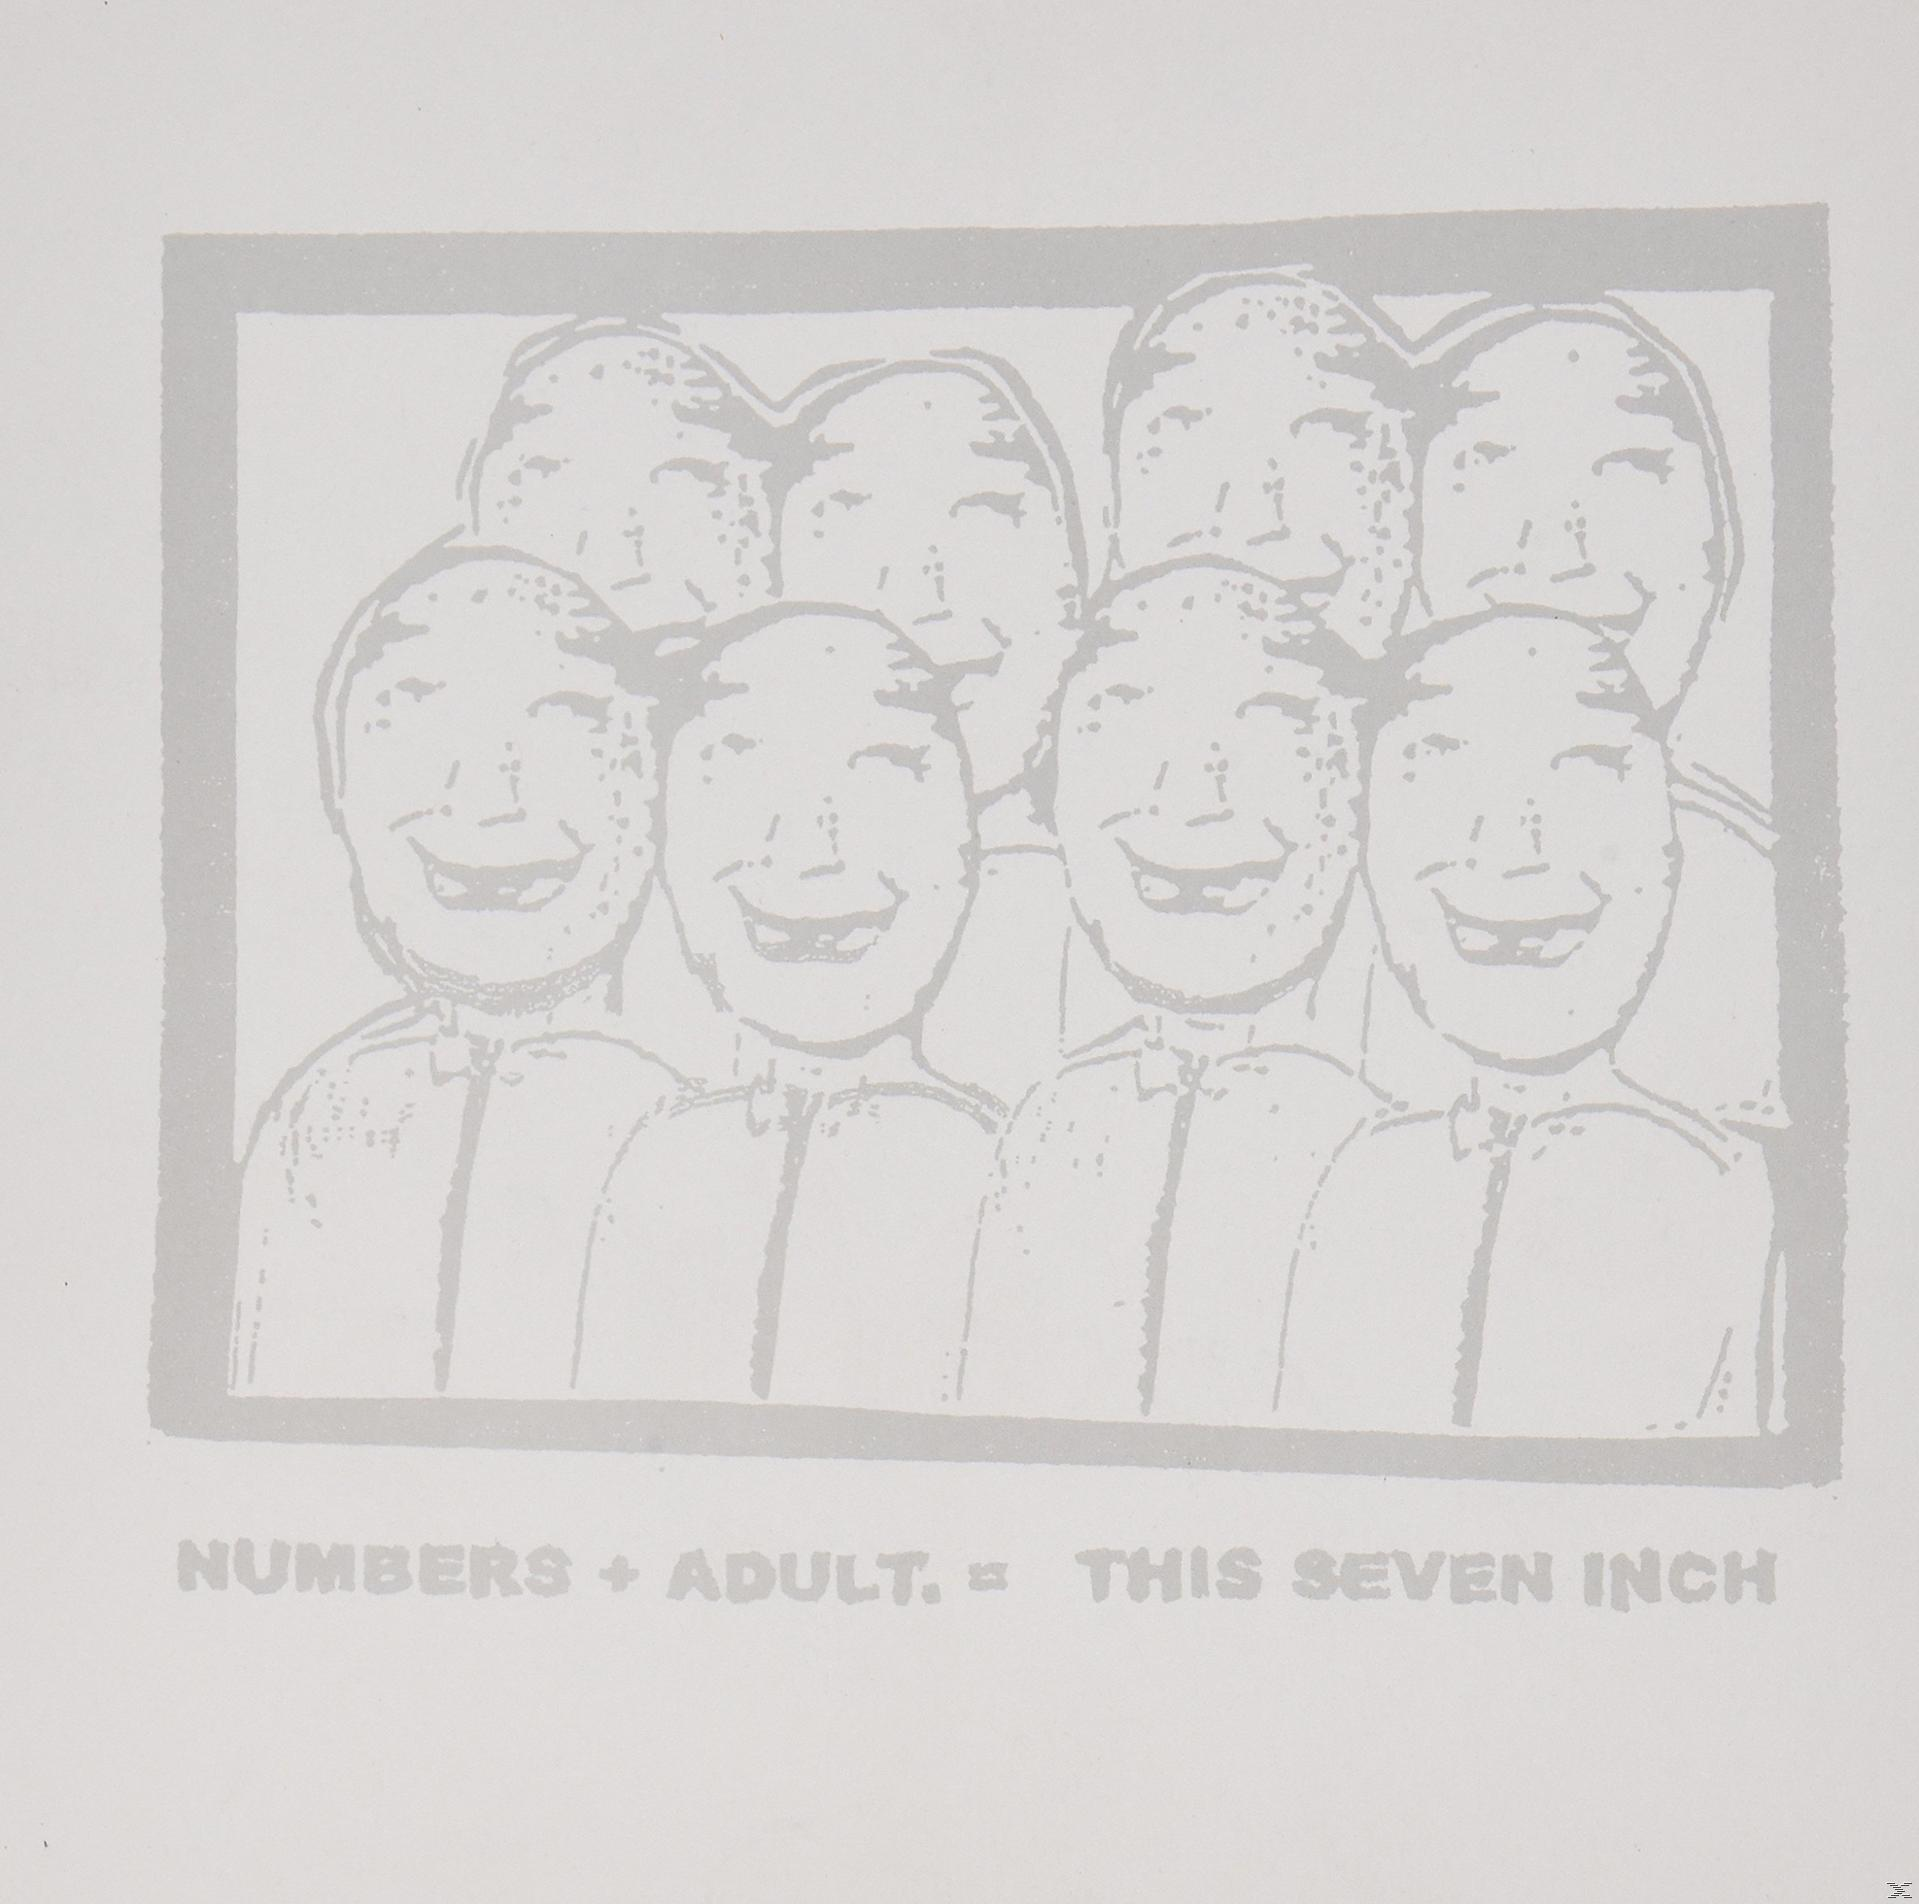 Seven Adult - Inch This - Numbers, (Vinyl) (Split)